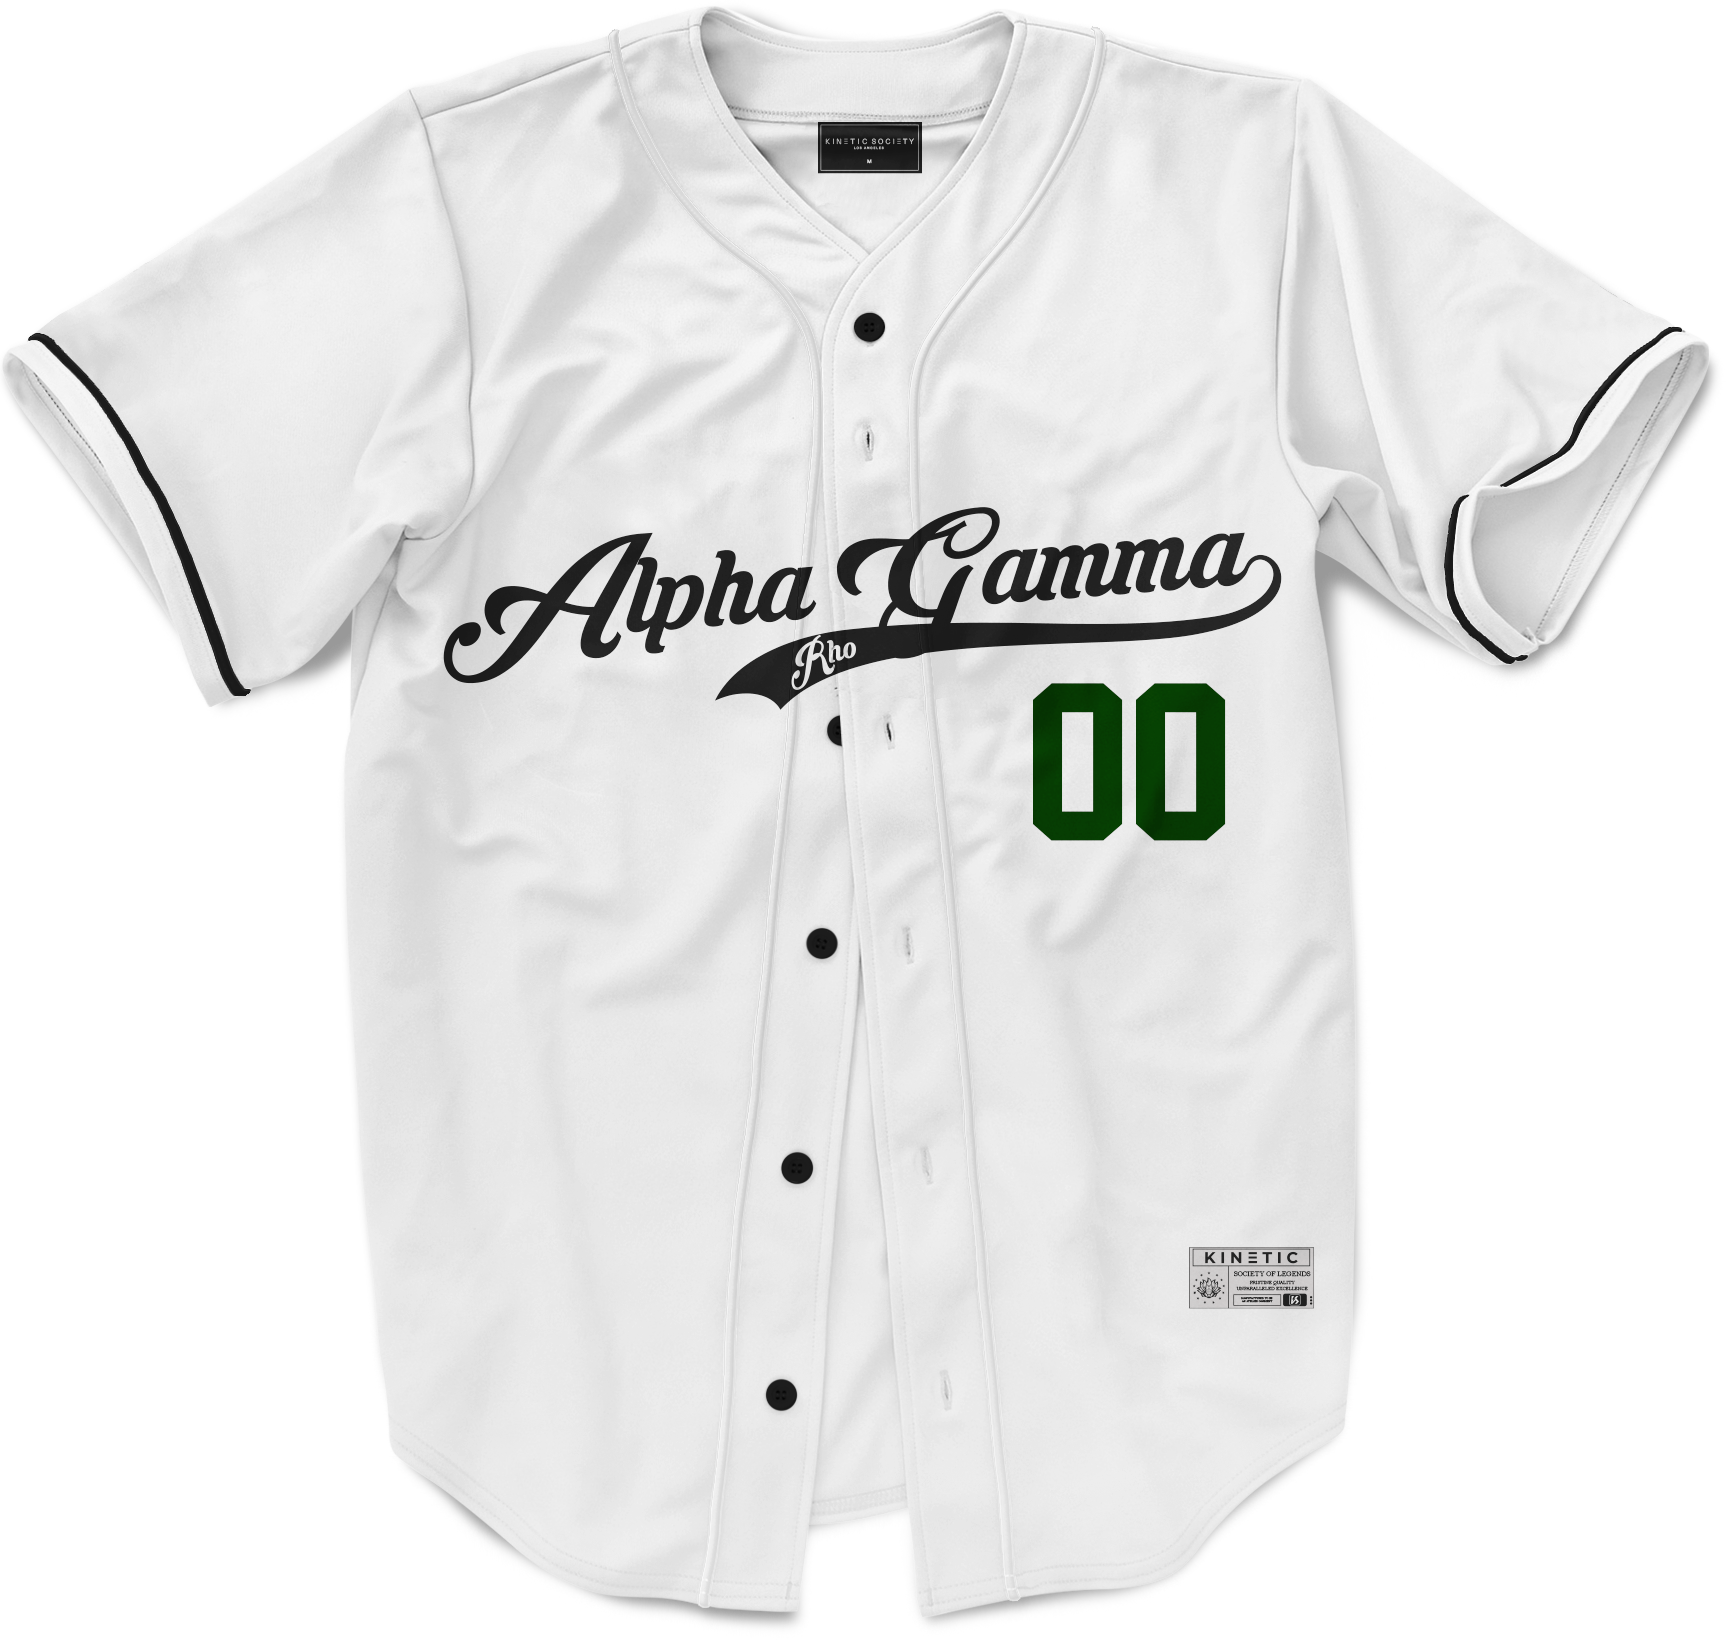 Alpha Gamma Rho - Classic Ballpark Green Baseball Jersey